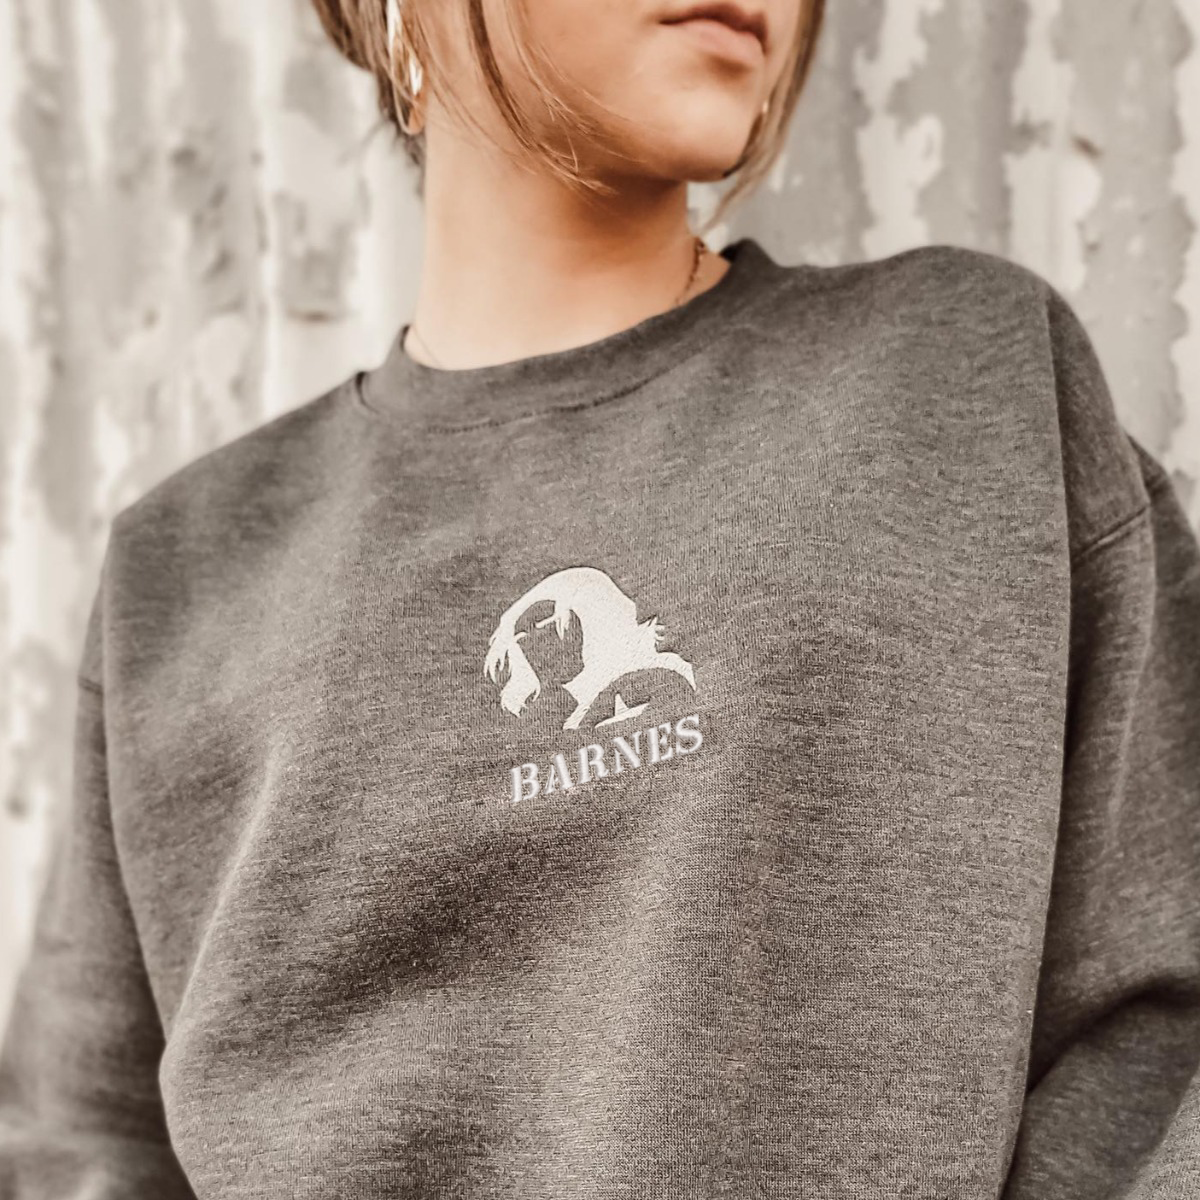 Barnes Embroidered Crewneck Sweater